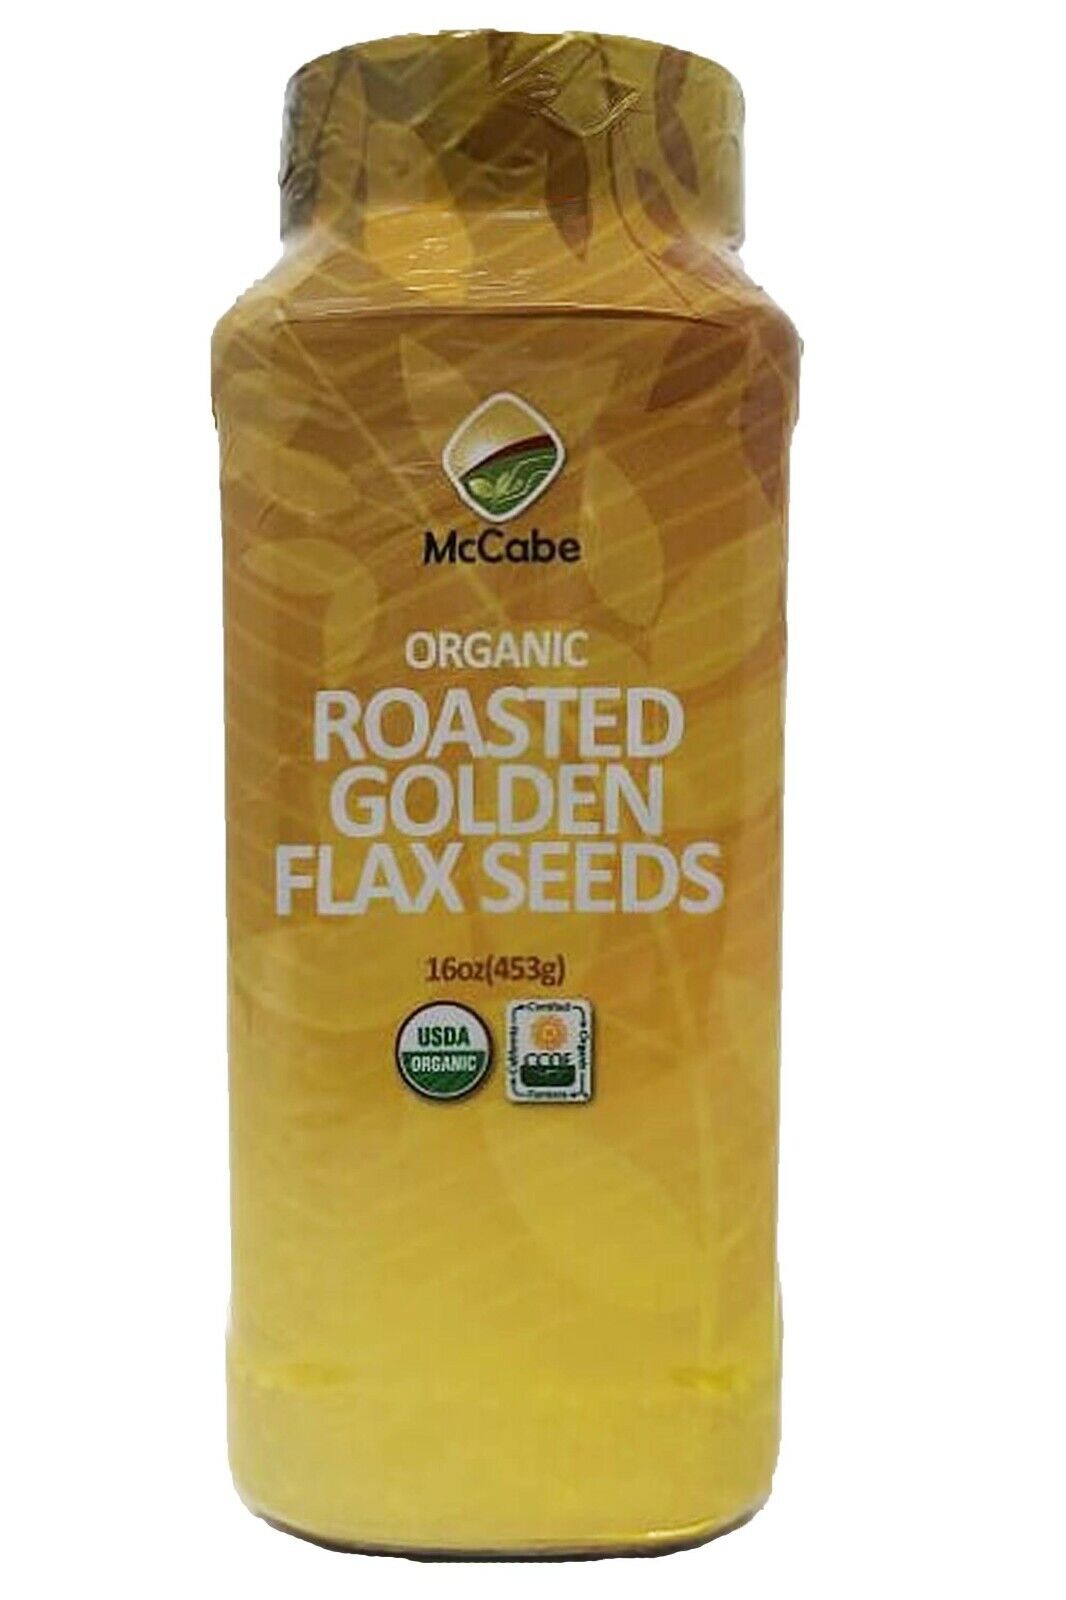 McCabe Organic Roasted Golden Flax Seed, 16 oz, USDA Organic Certified